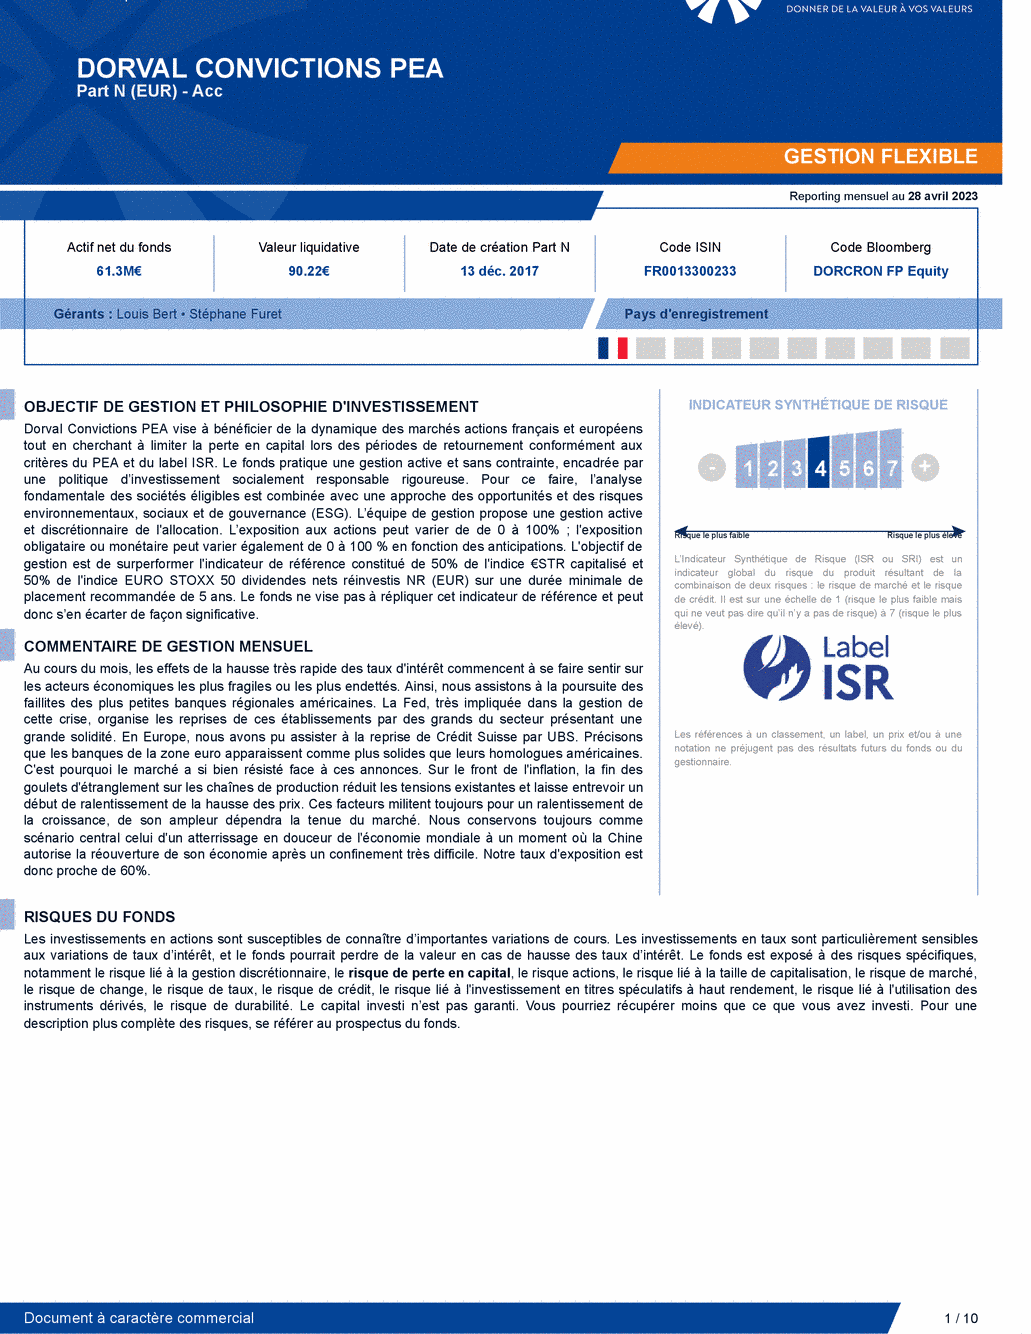 Reporting DORVAL CONVICTIONS PEA Part N - 28/04/2023 - Français